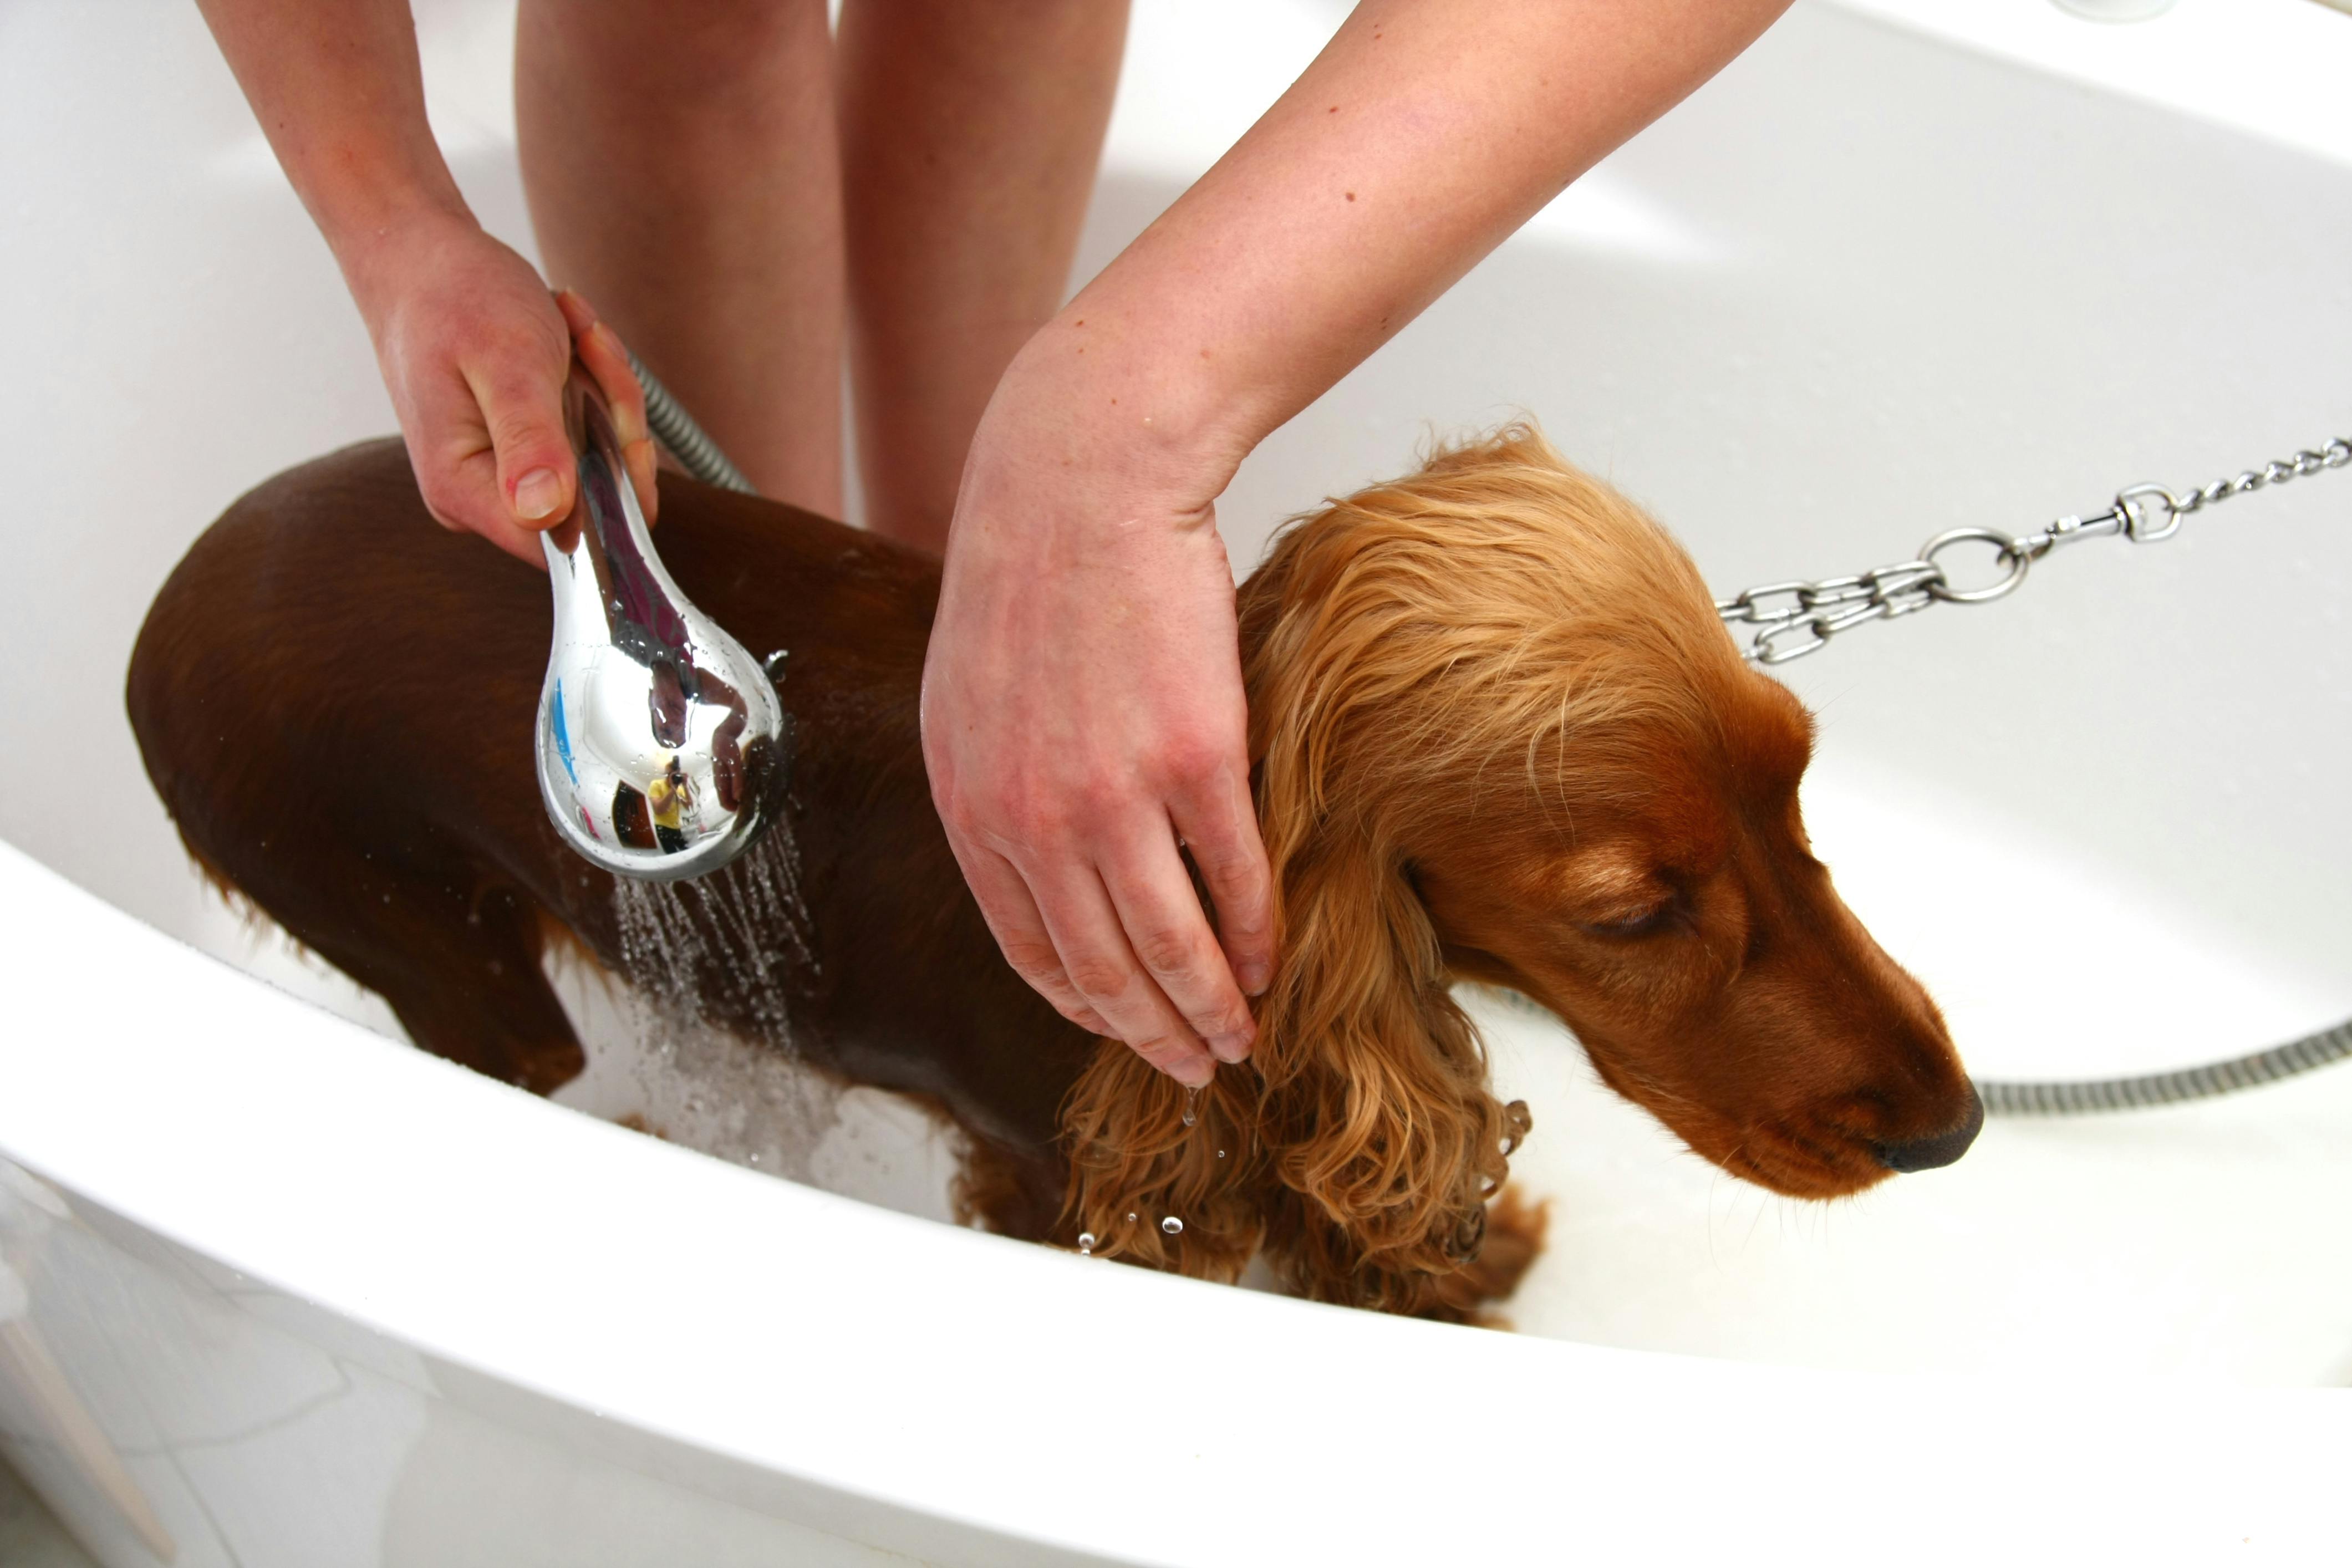 Dog being washed with a spray shower head in a bathtub